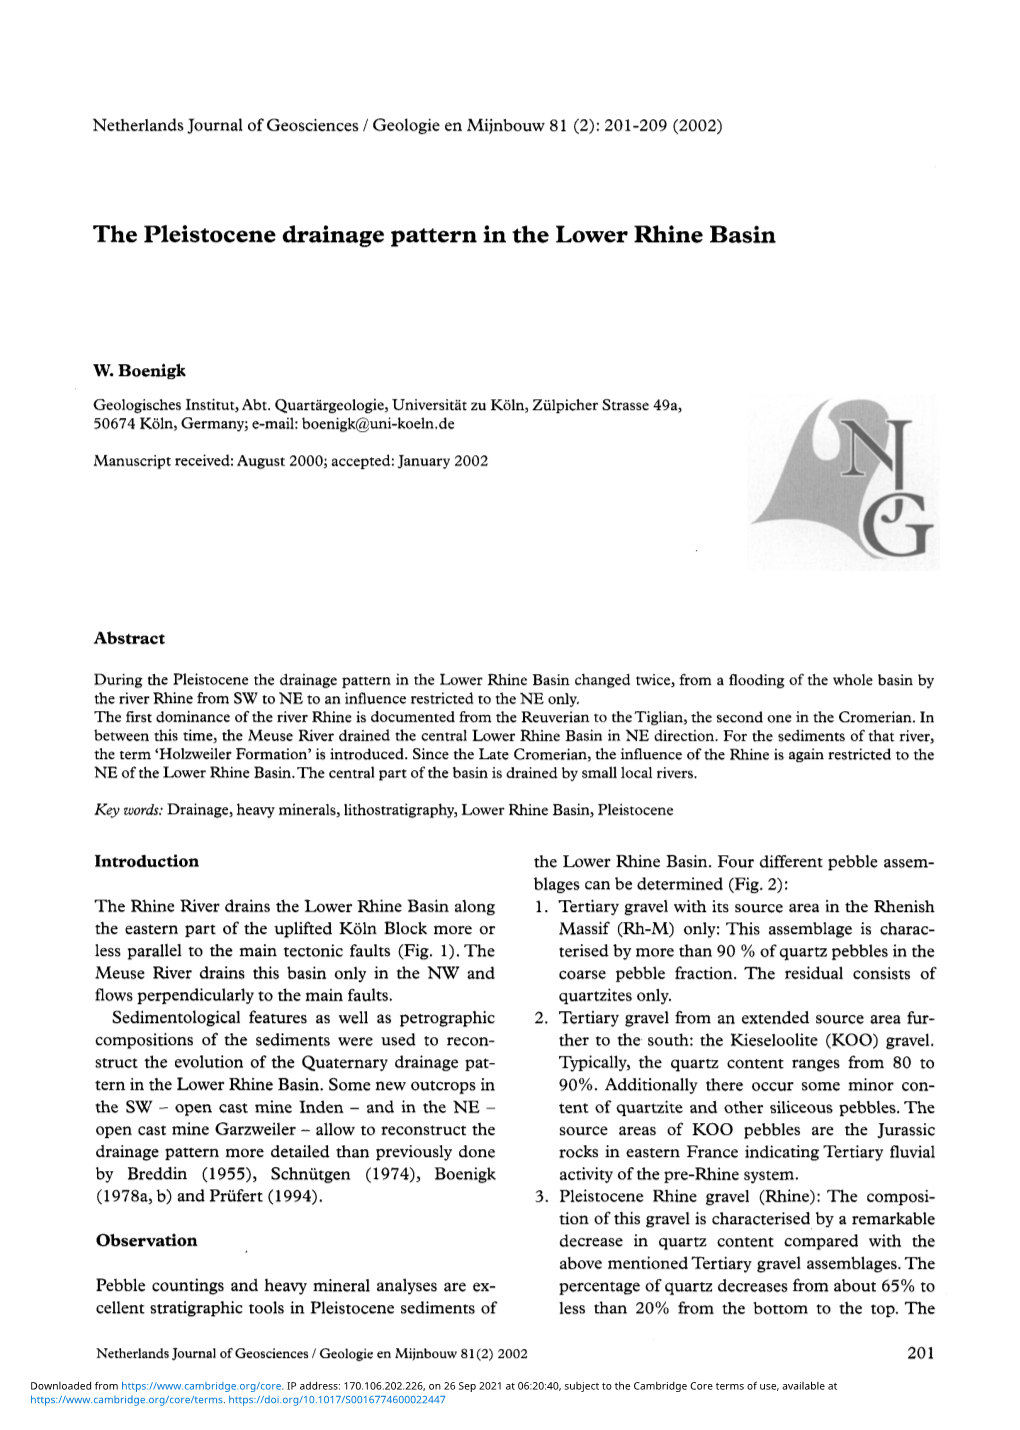 The Pleistocene Drainage Pattern in the Lower Rhine Basin